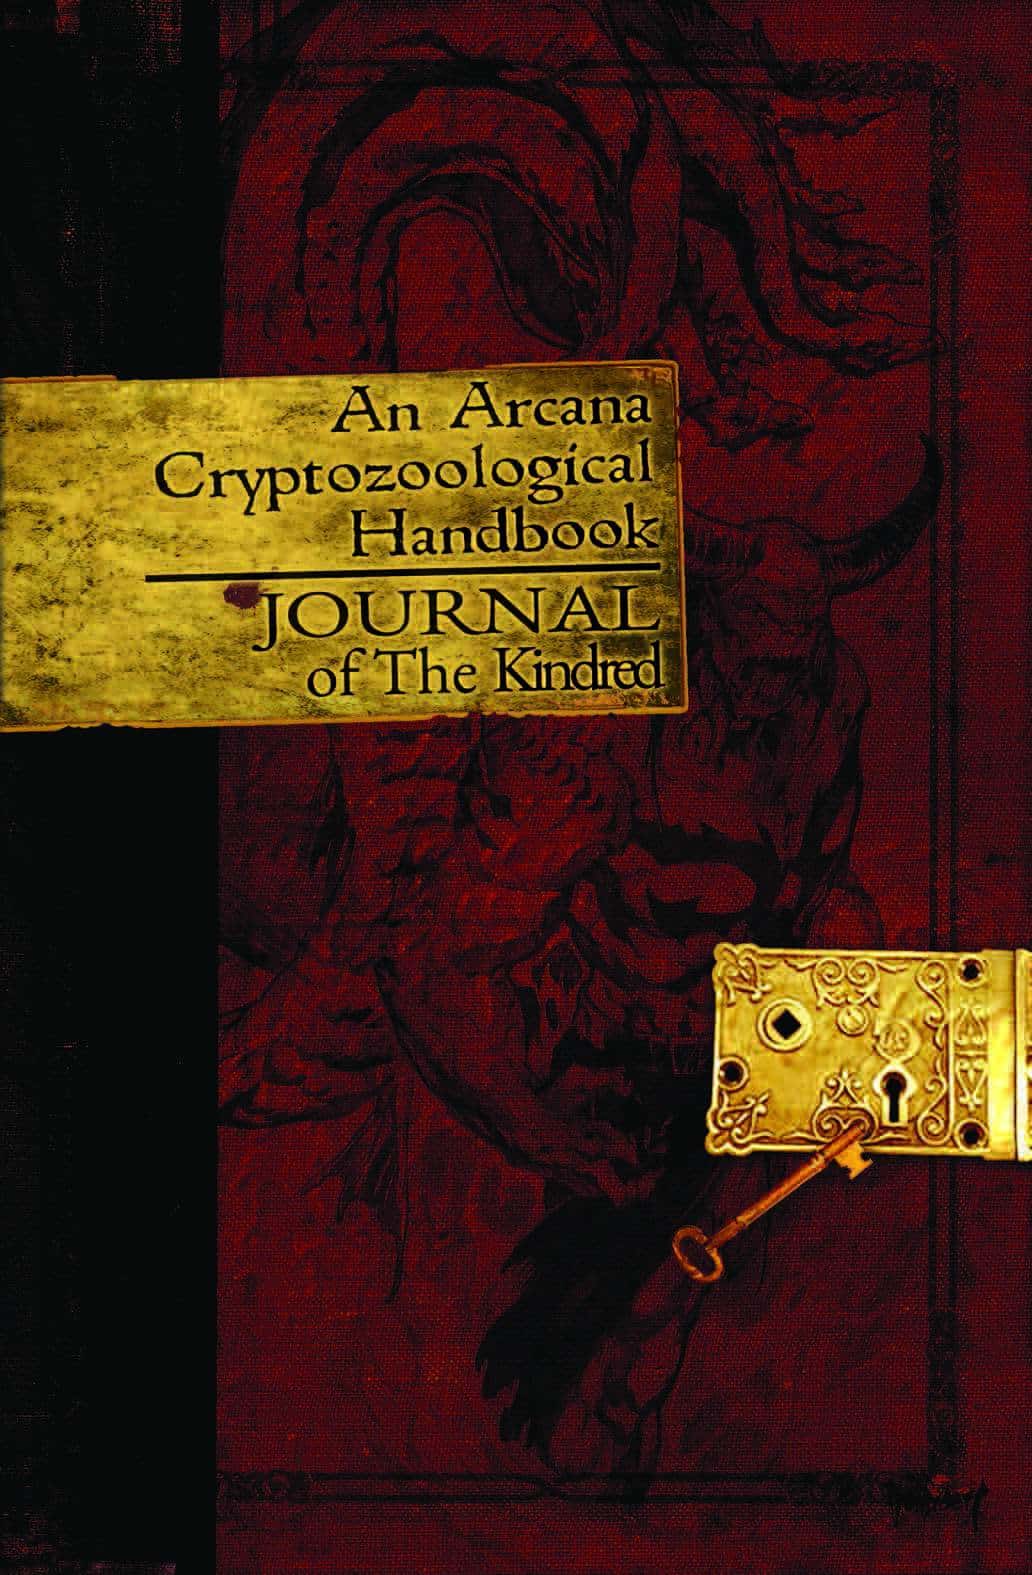 An Arcana Cryptozoology Handbook: Journal of the Kindred